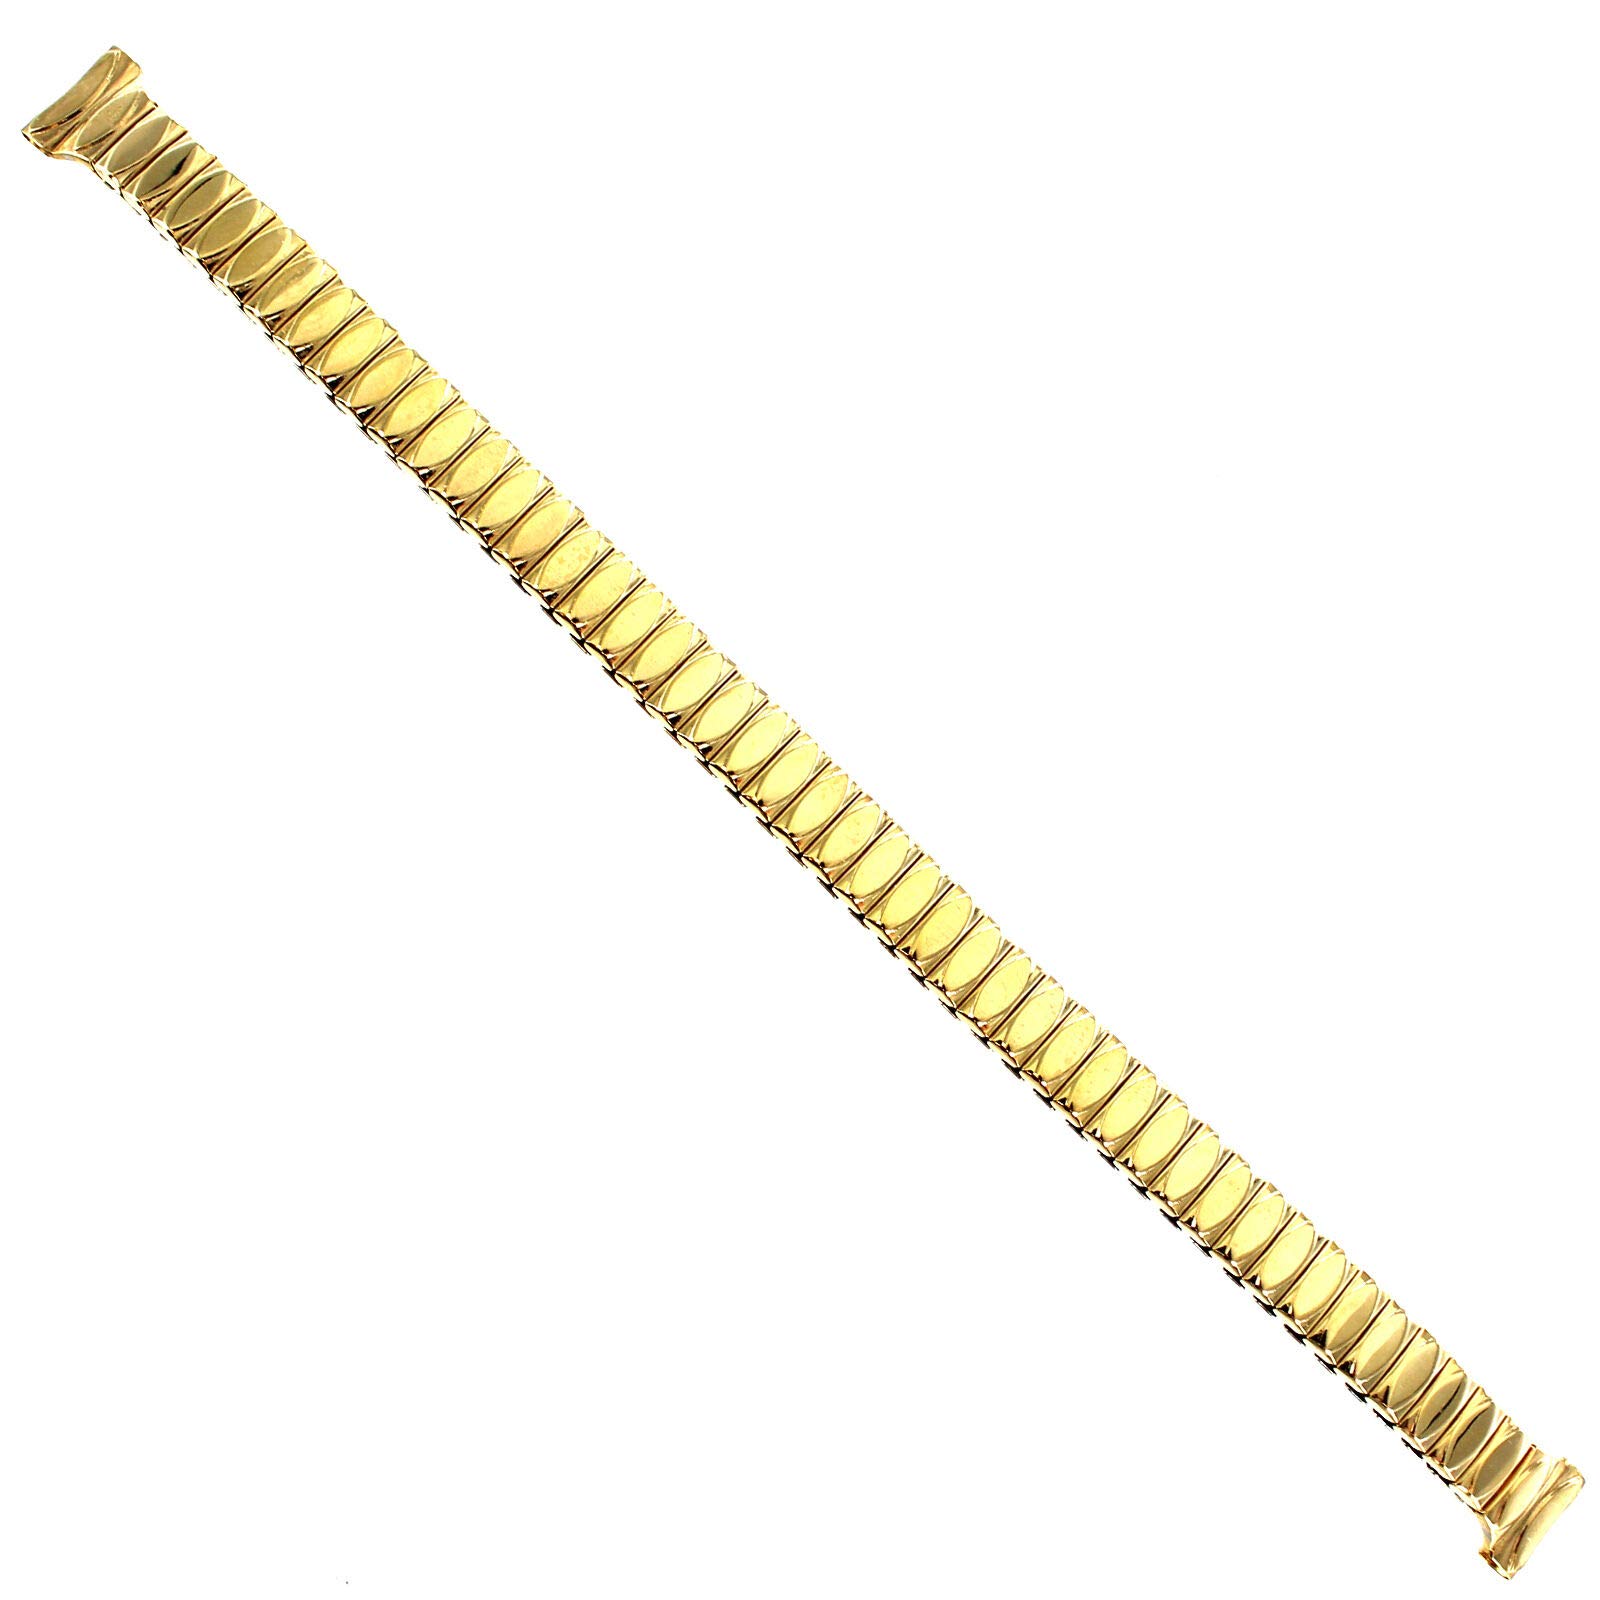 Speidel 9mm Gold Plated Twist O Flex Expansion Band